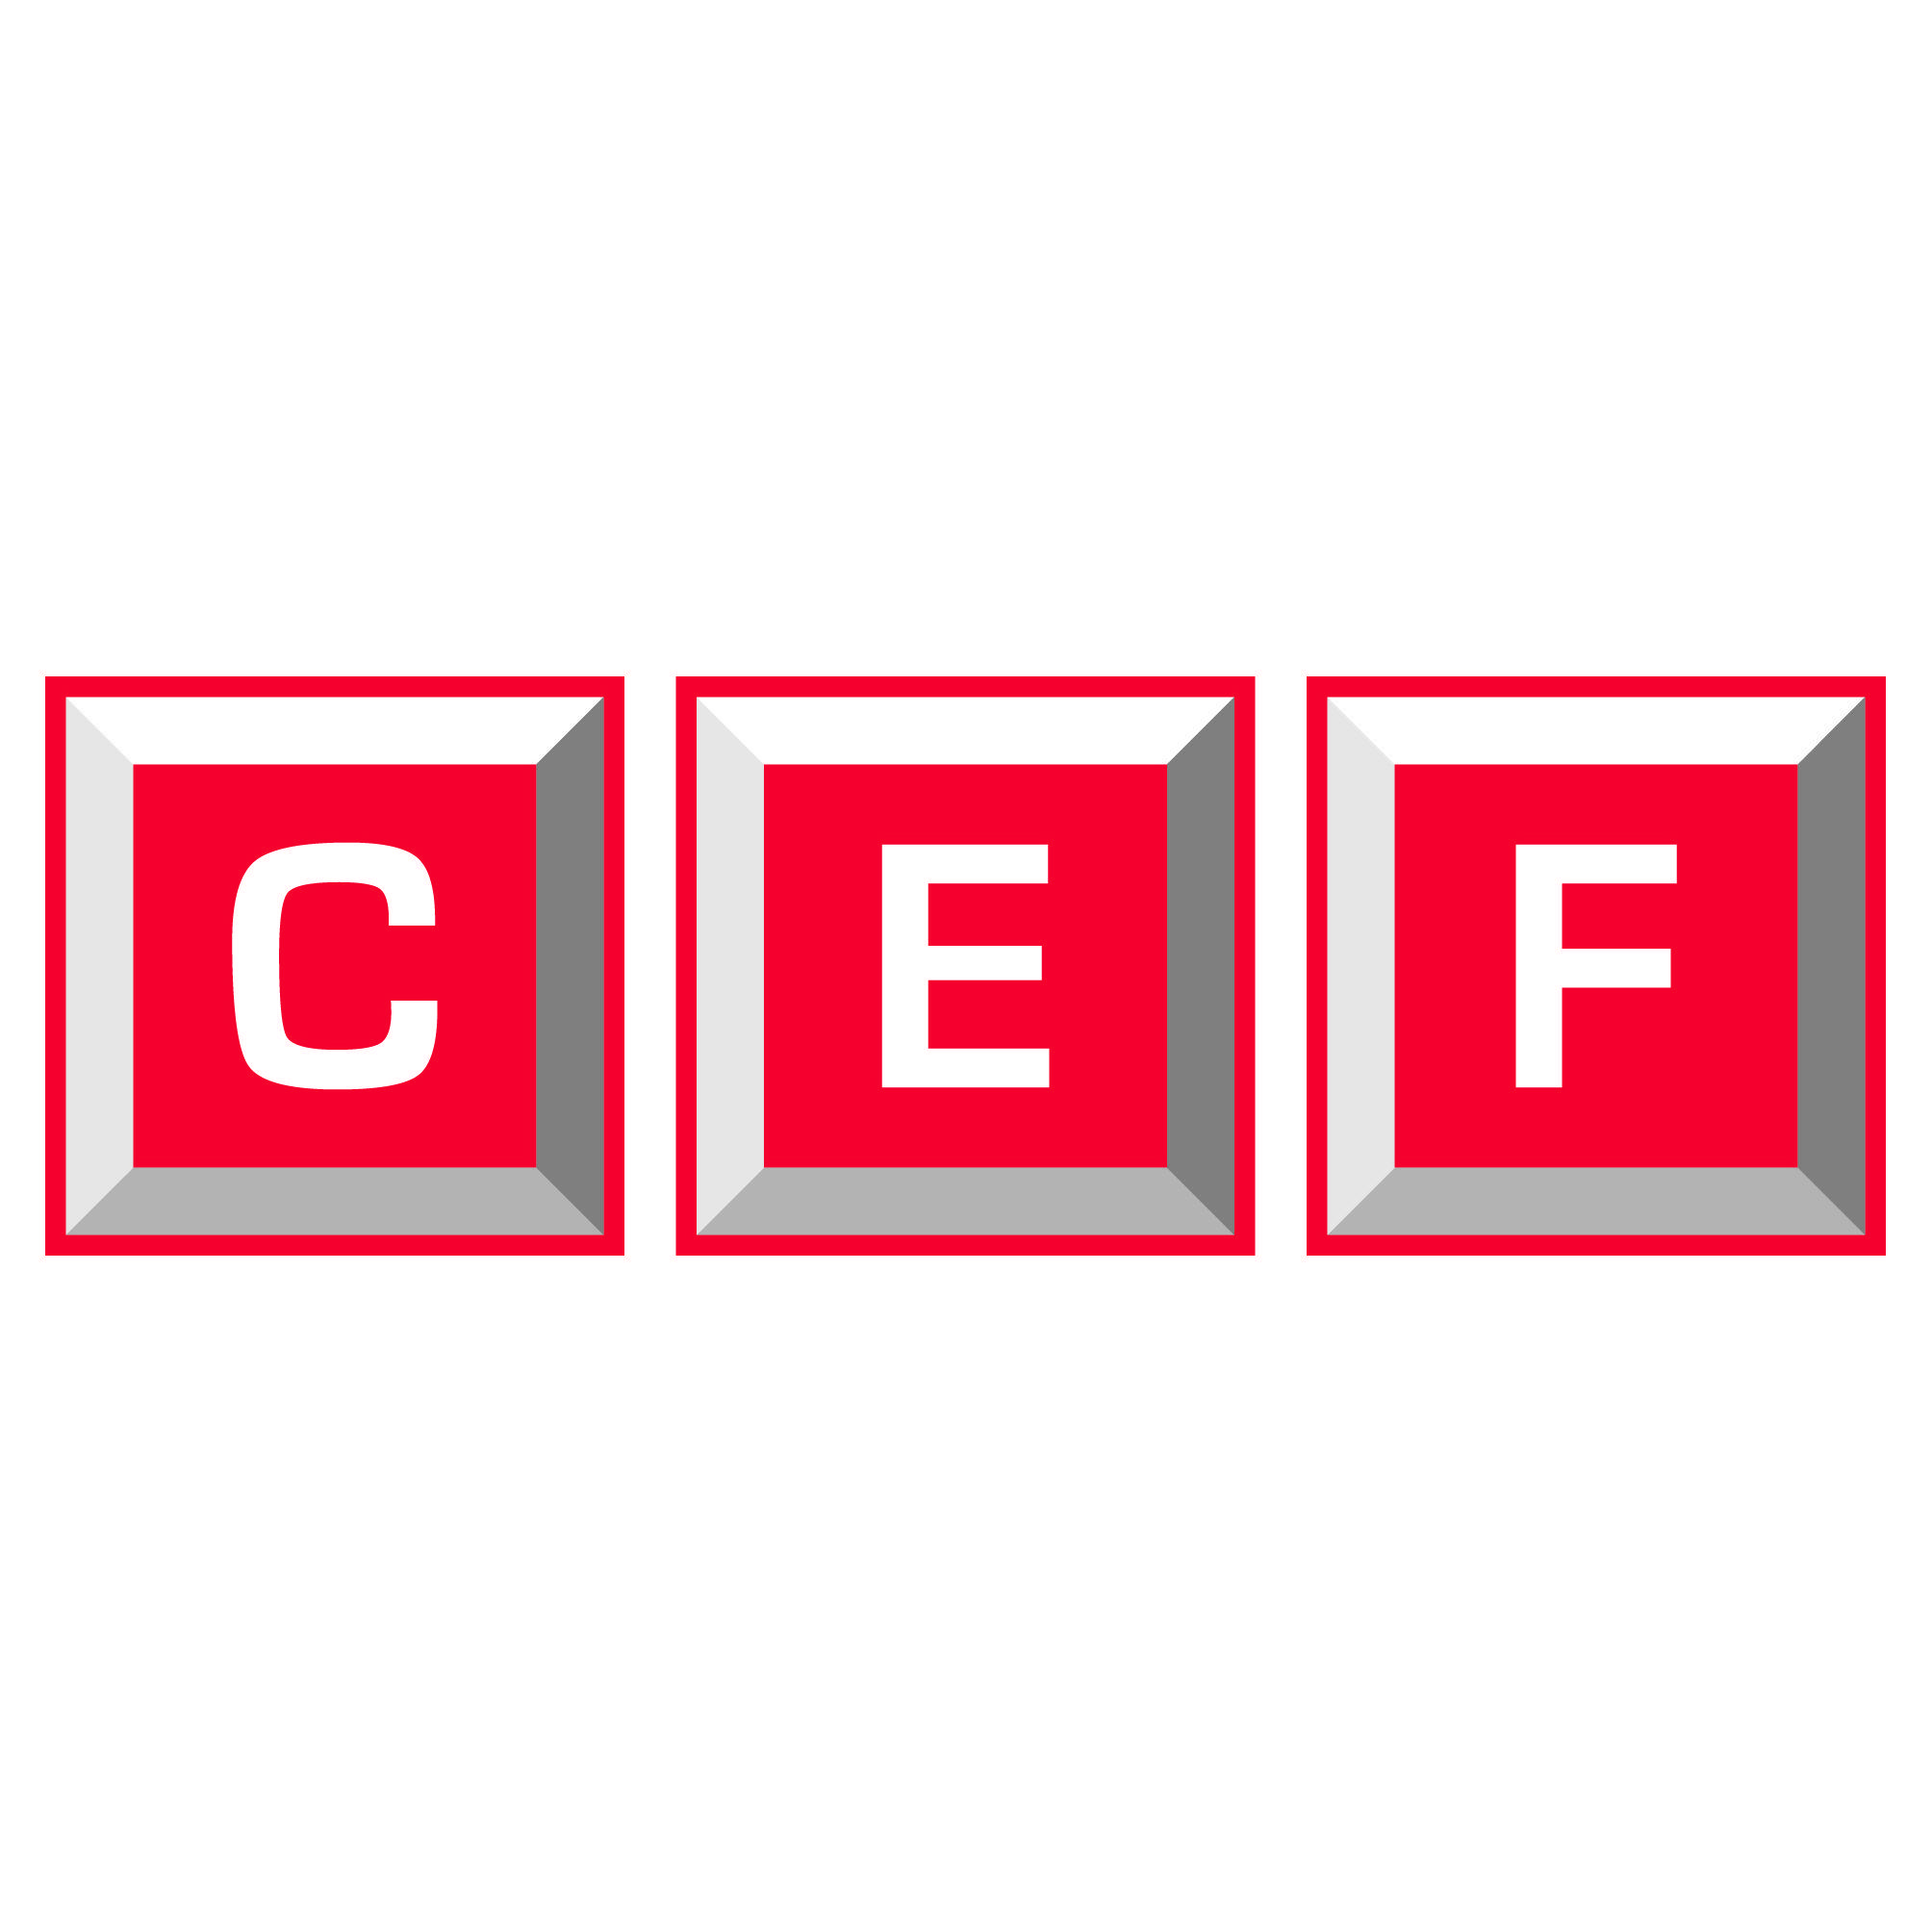 CEF Logo - CEF Logo Horizontal with clearance - Ringtail Emergency Lighting.